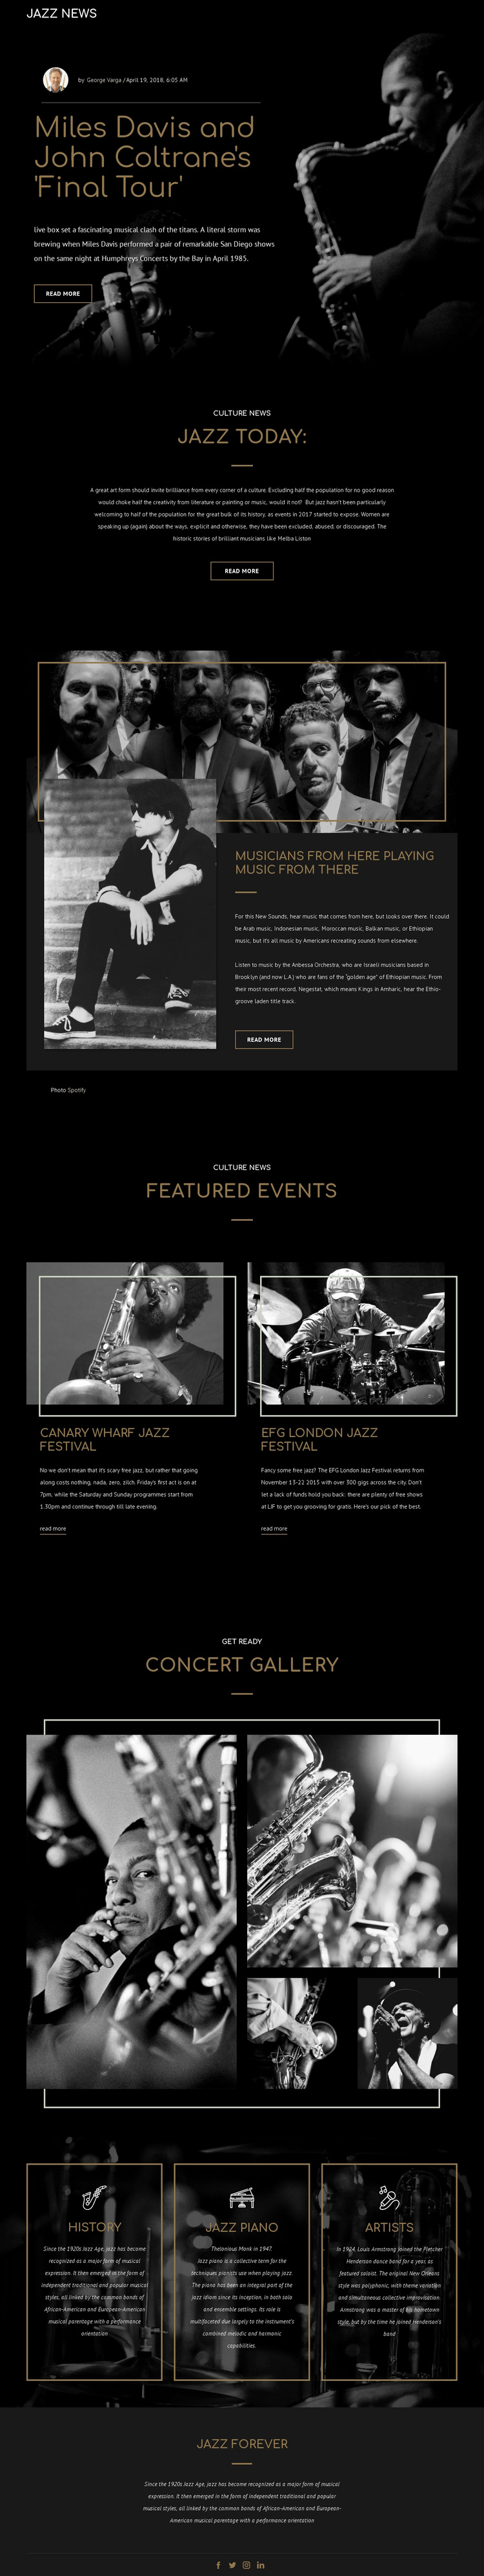 Legengs of jazz music Website Template